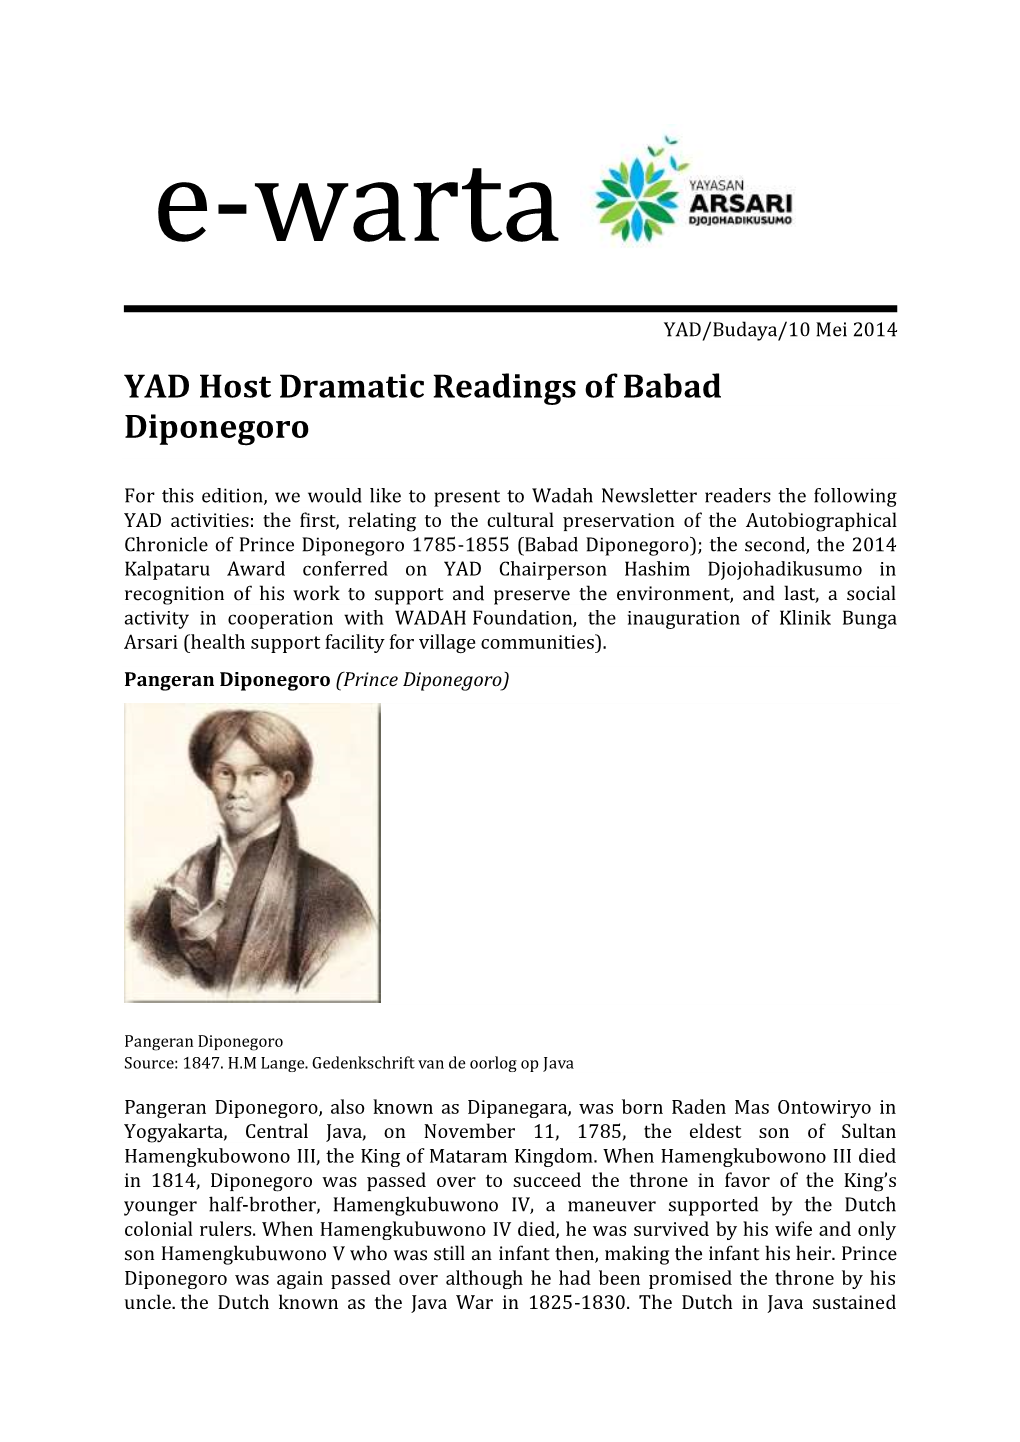 YAD Host Dramatic Readings of Babad Diponegoro